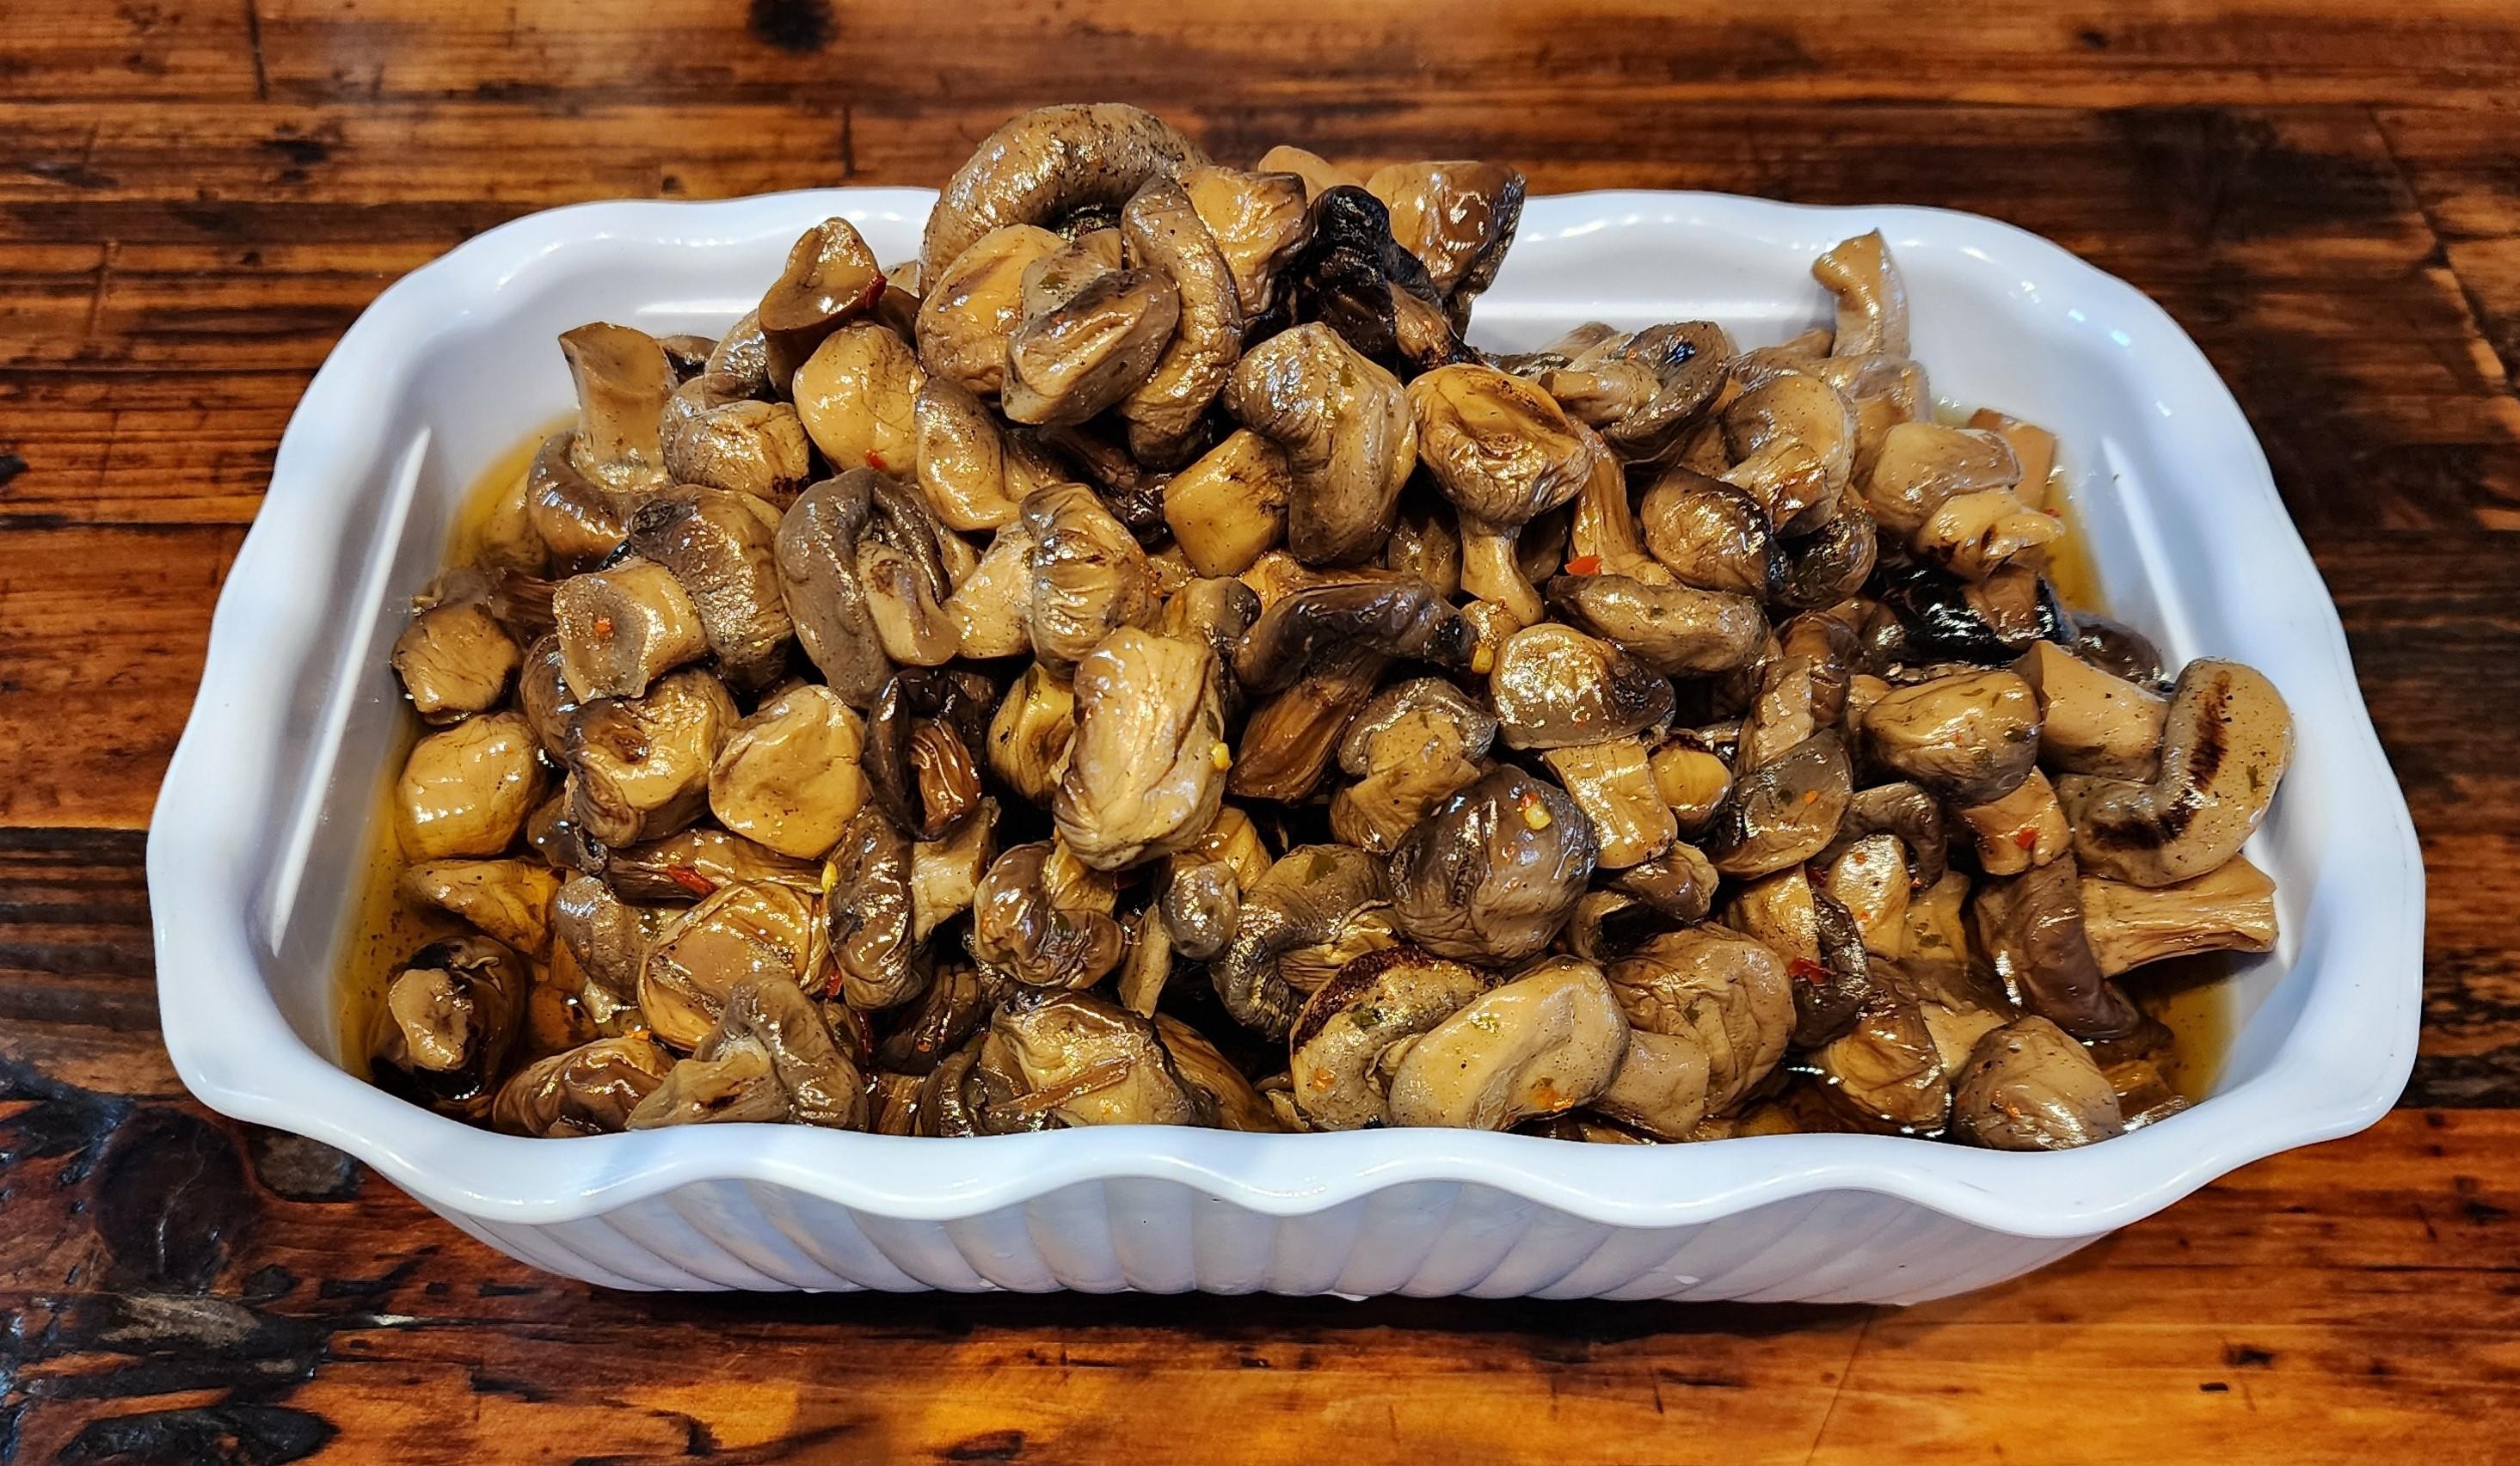 Grilled Mushrooms - Large